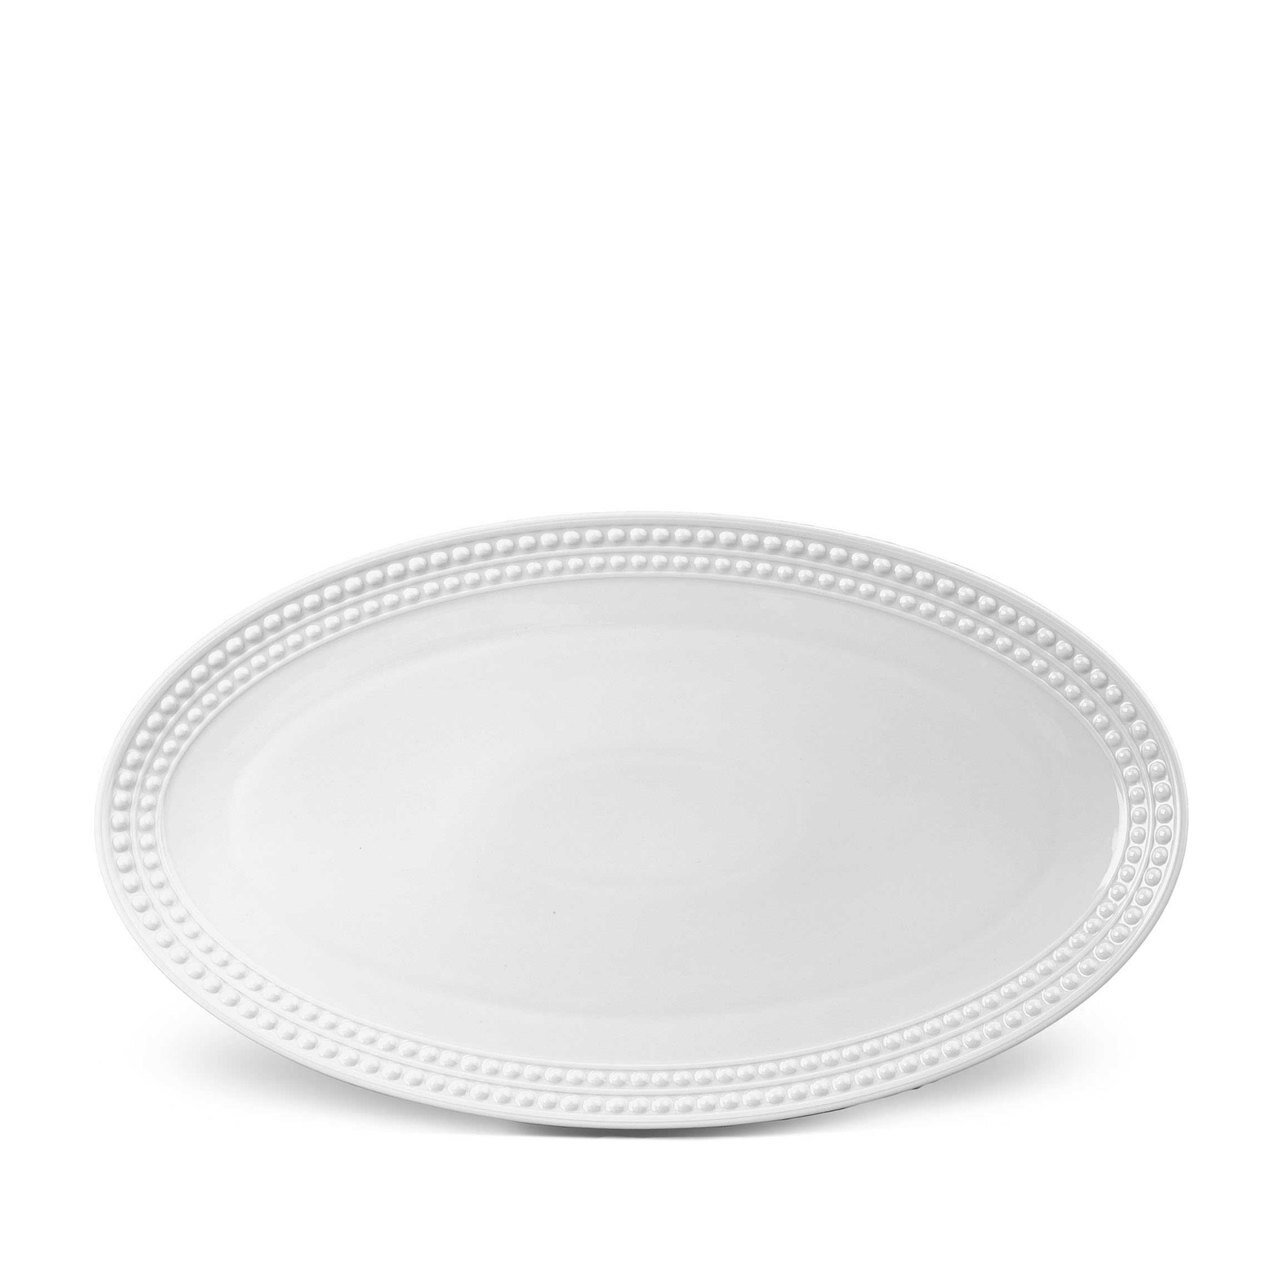 L'Objet Perlee Large Oval Platter White